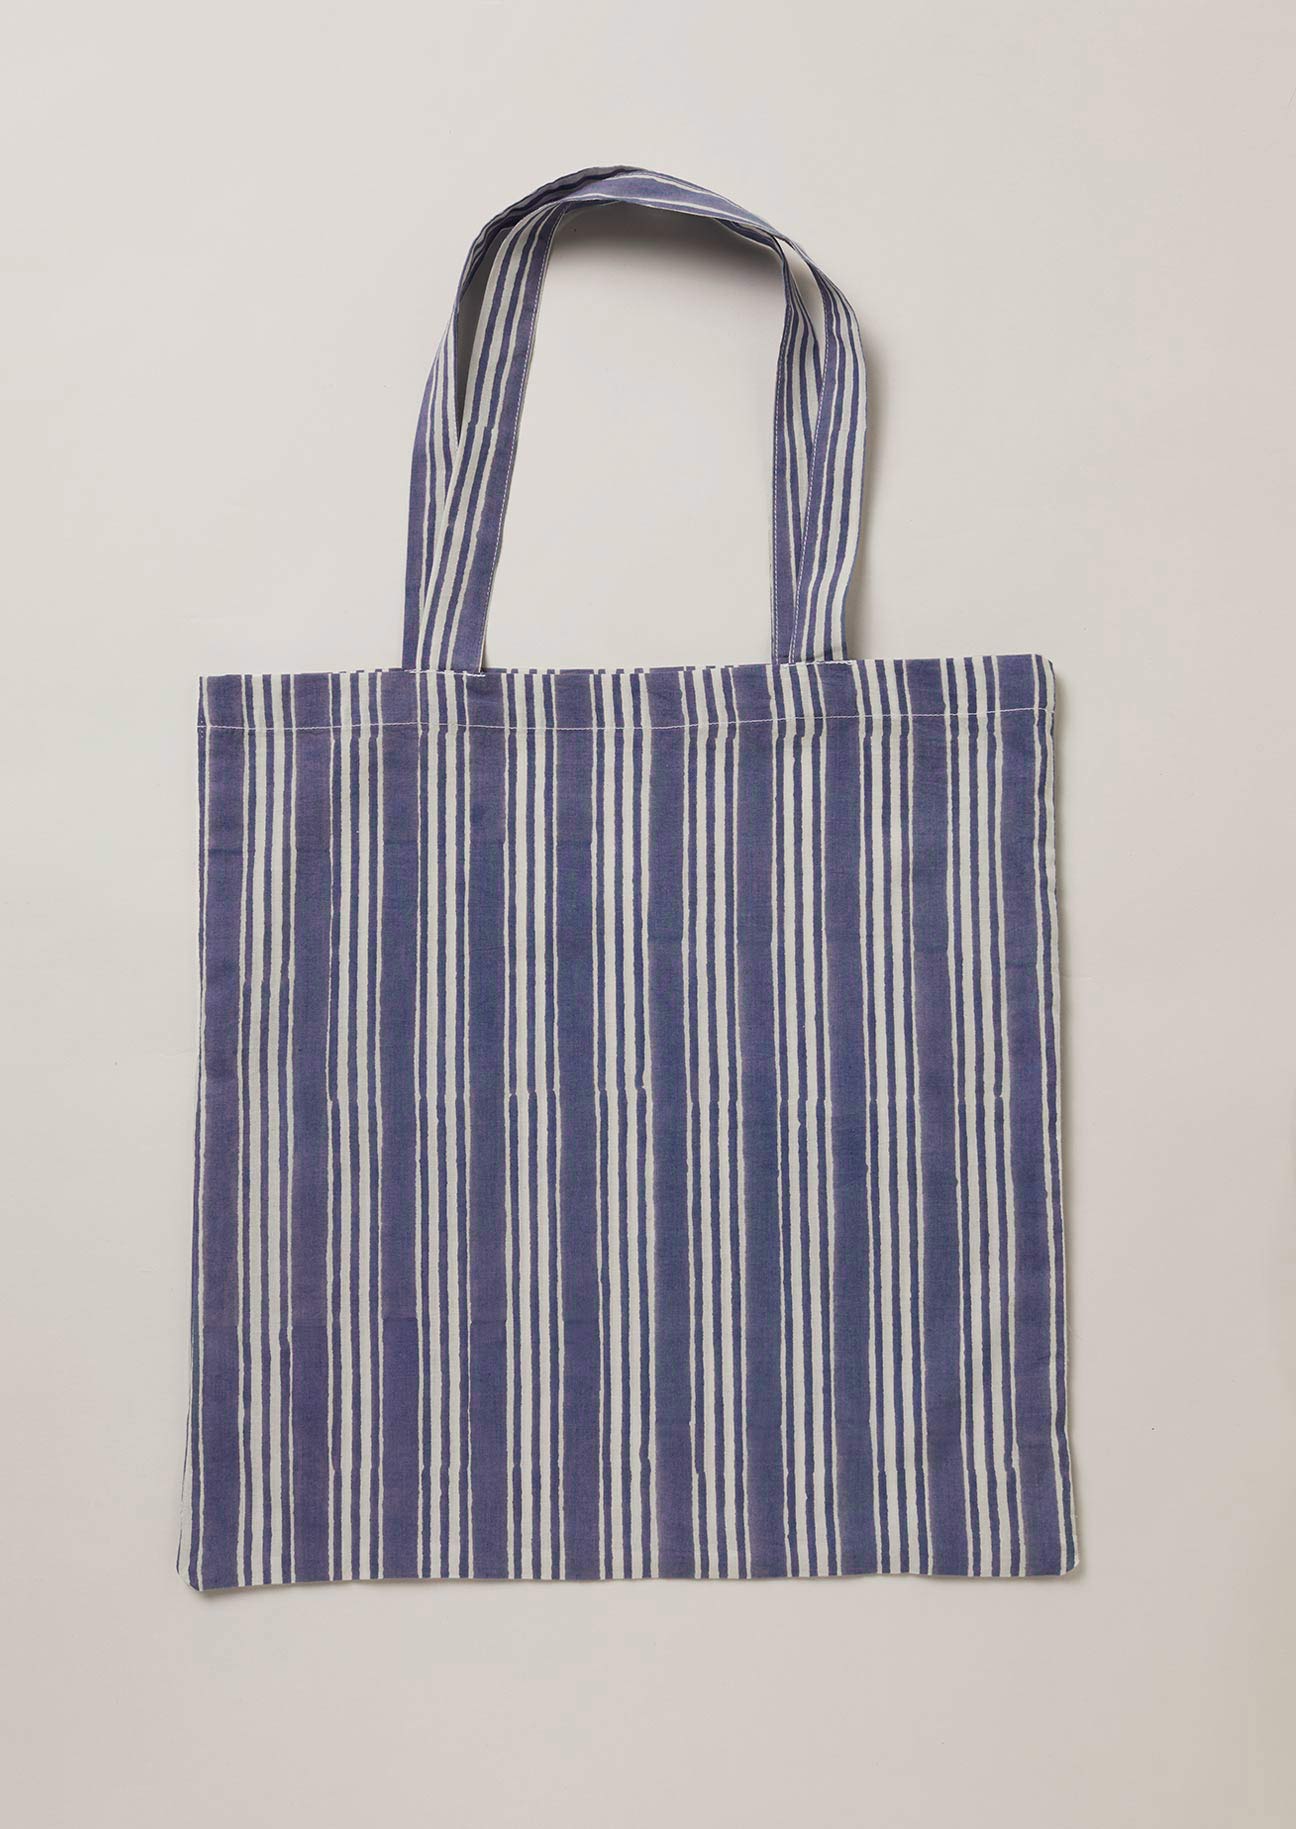 Navy and white block printed stripe tote bag.